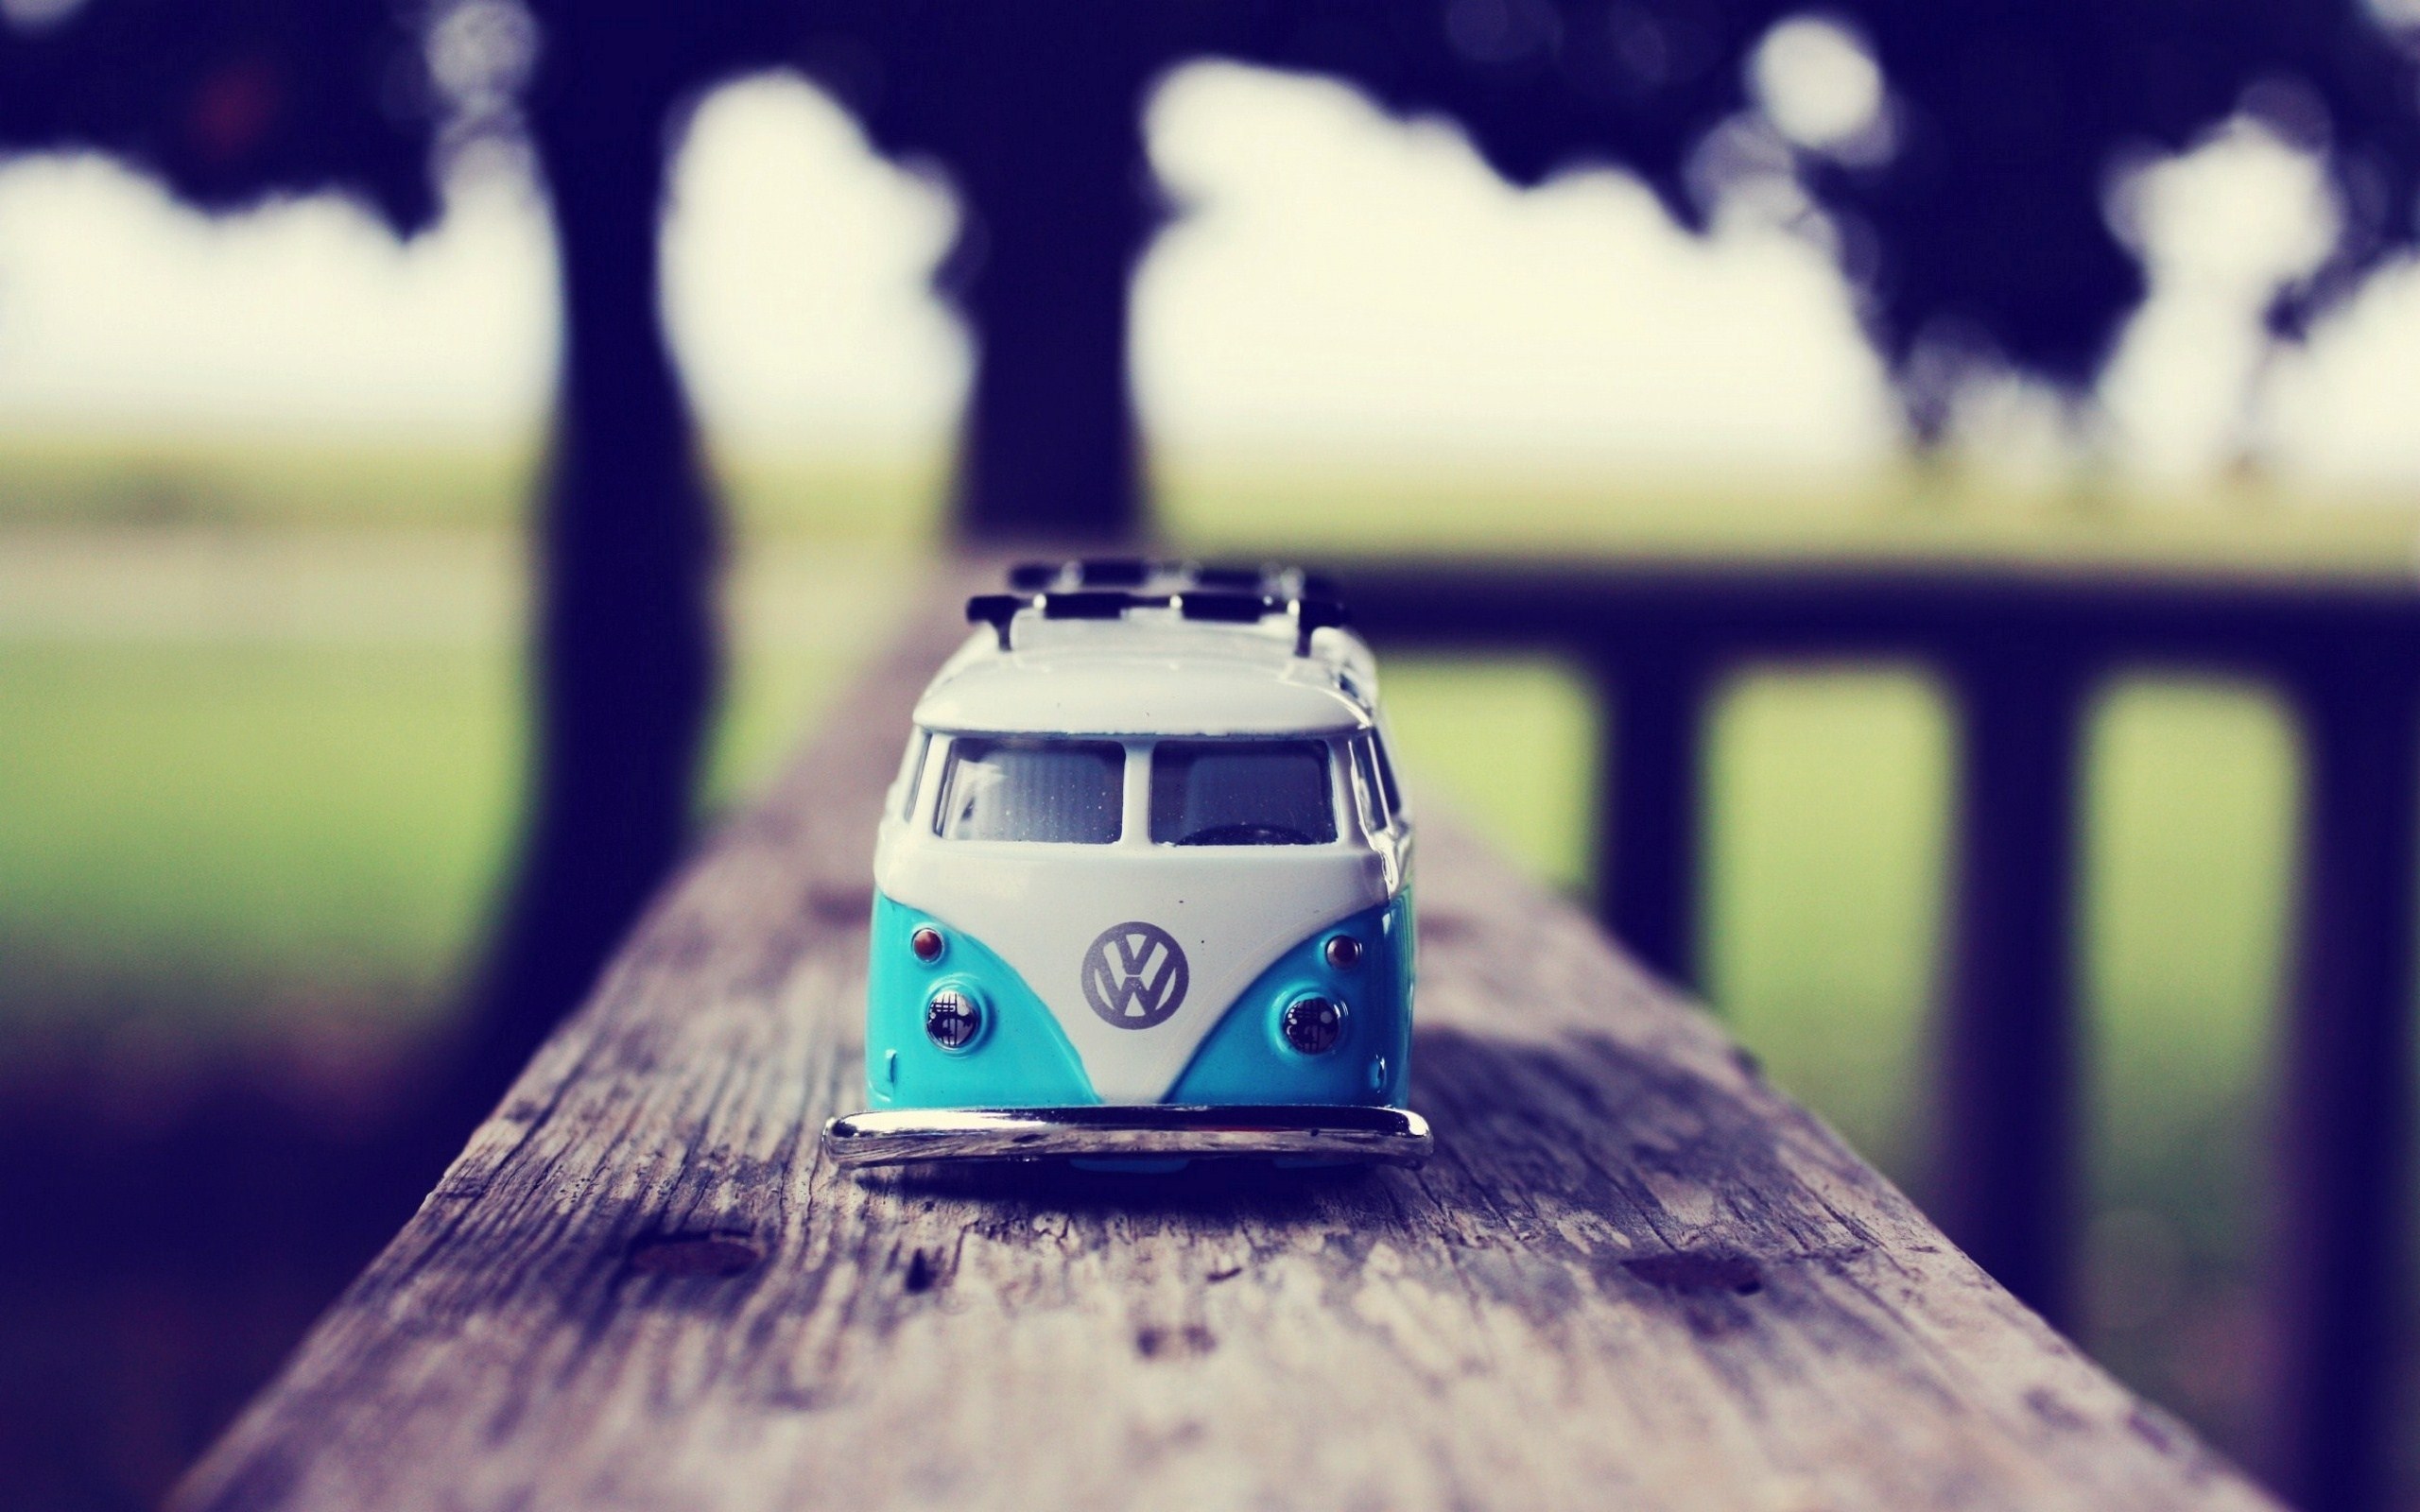 Wonderful Volkswagen Toy Wallpaper